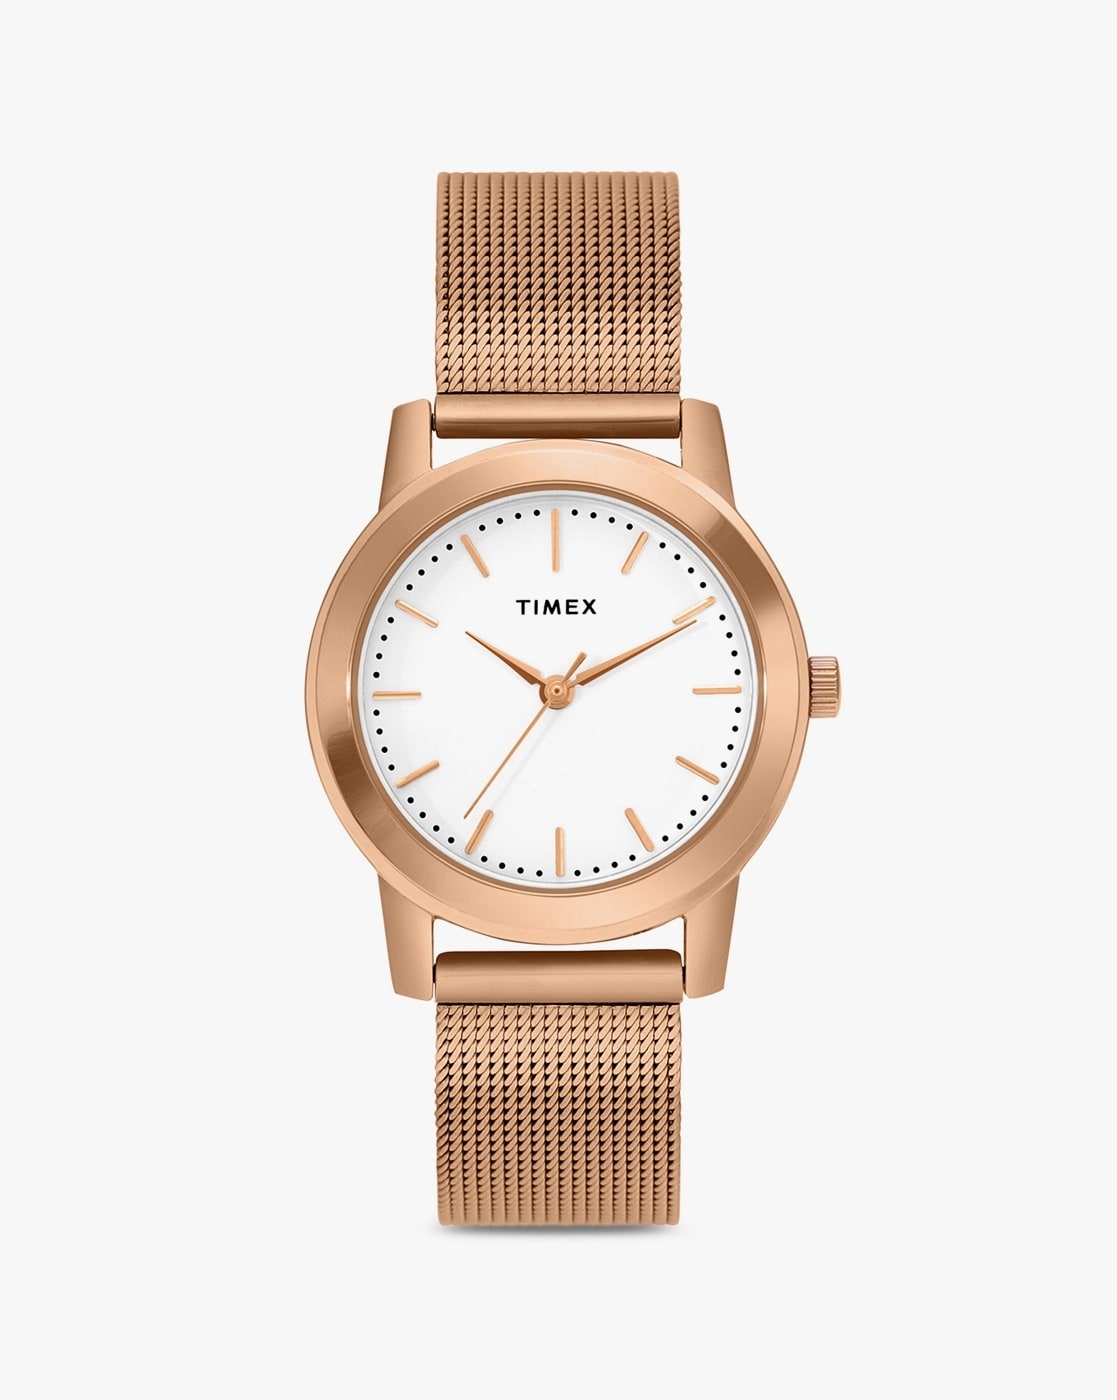 Timex Digital Watch Women